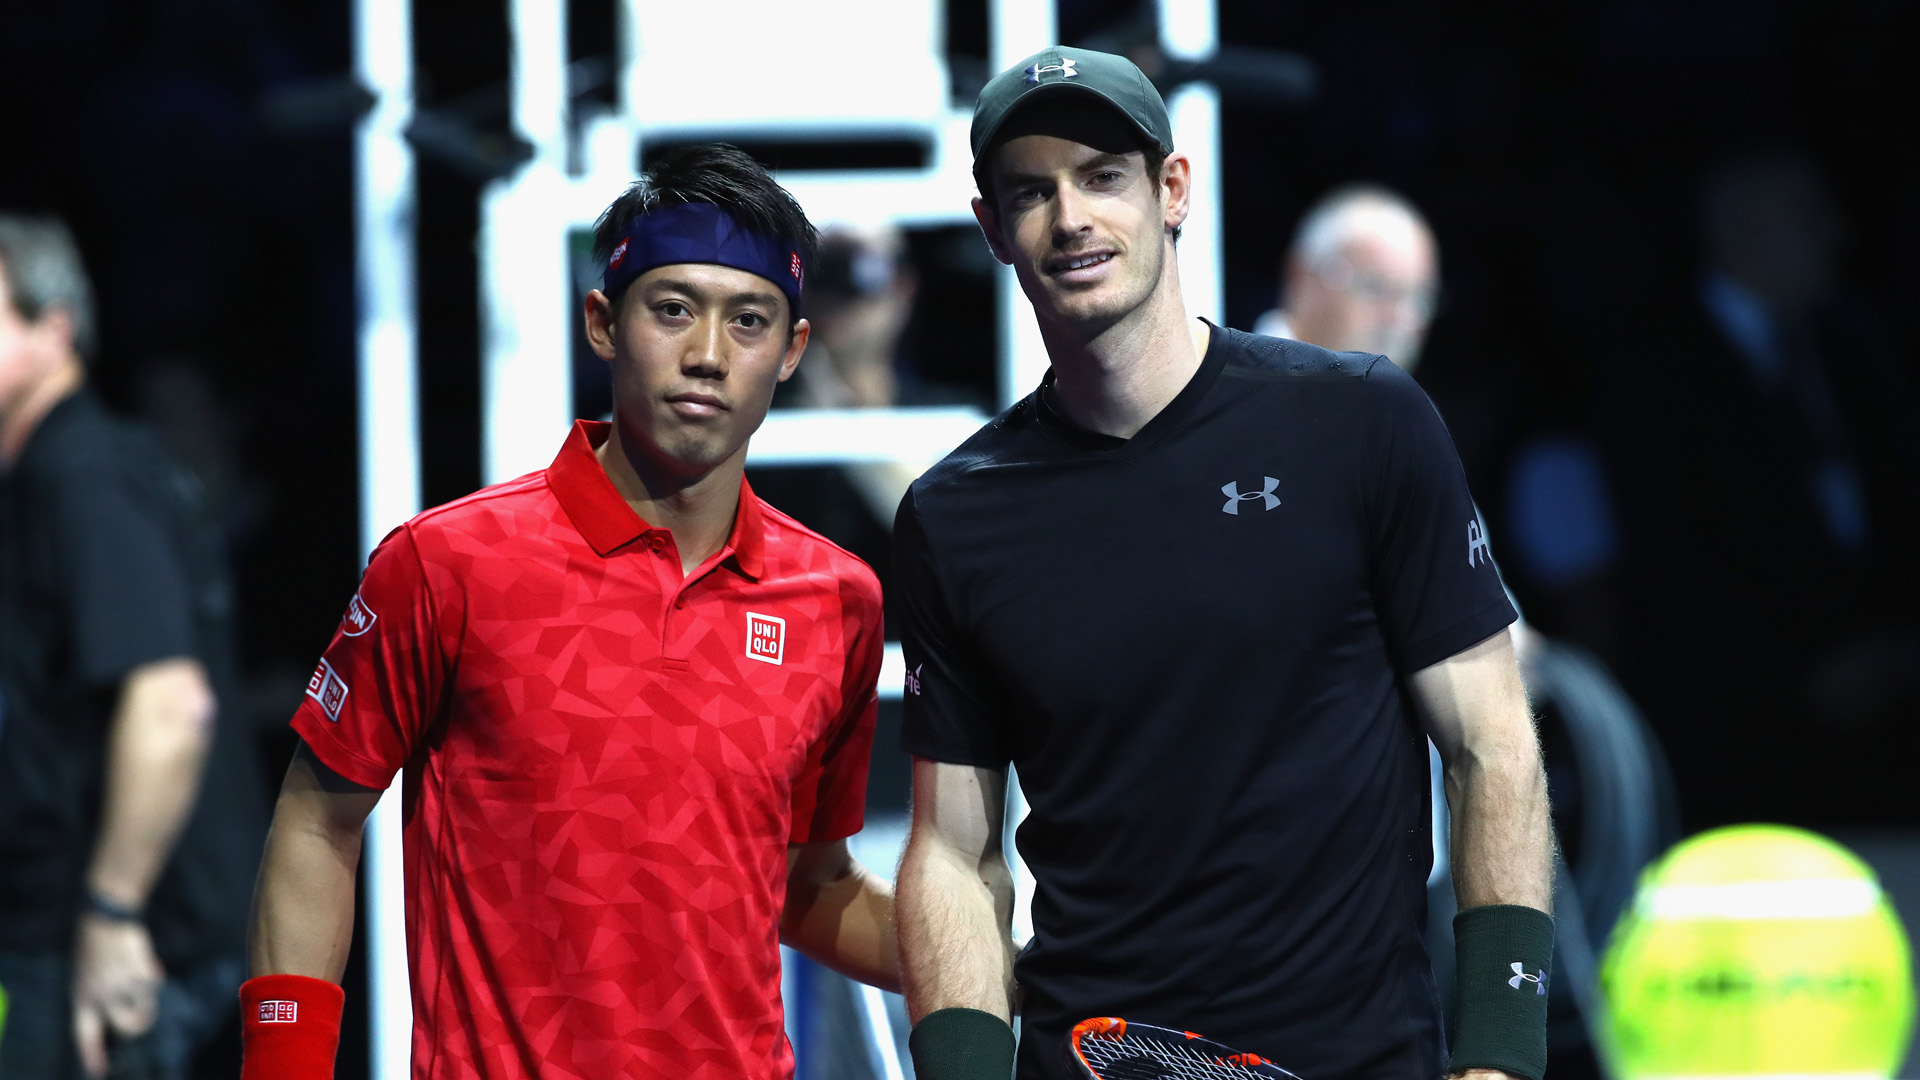 Andy Murray VS Kei Nishikori ( BETTING TIPS, Match Preview & Expert Analysis )™